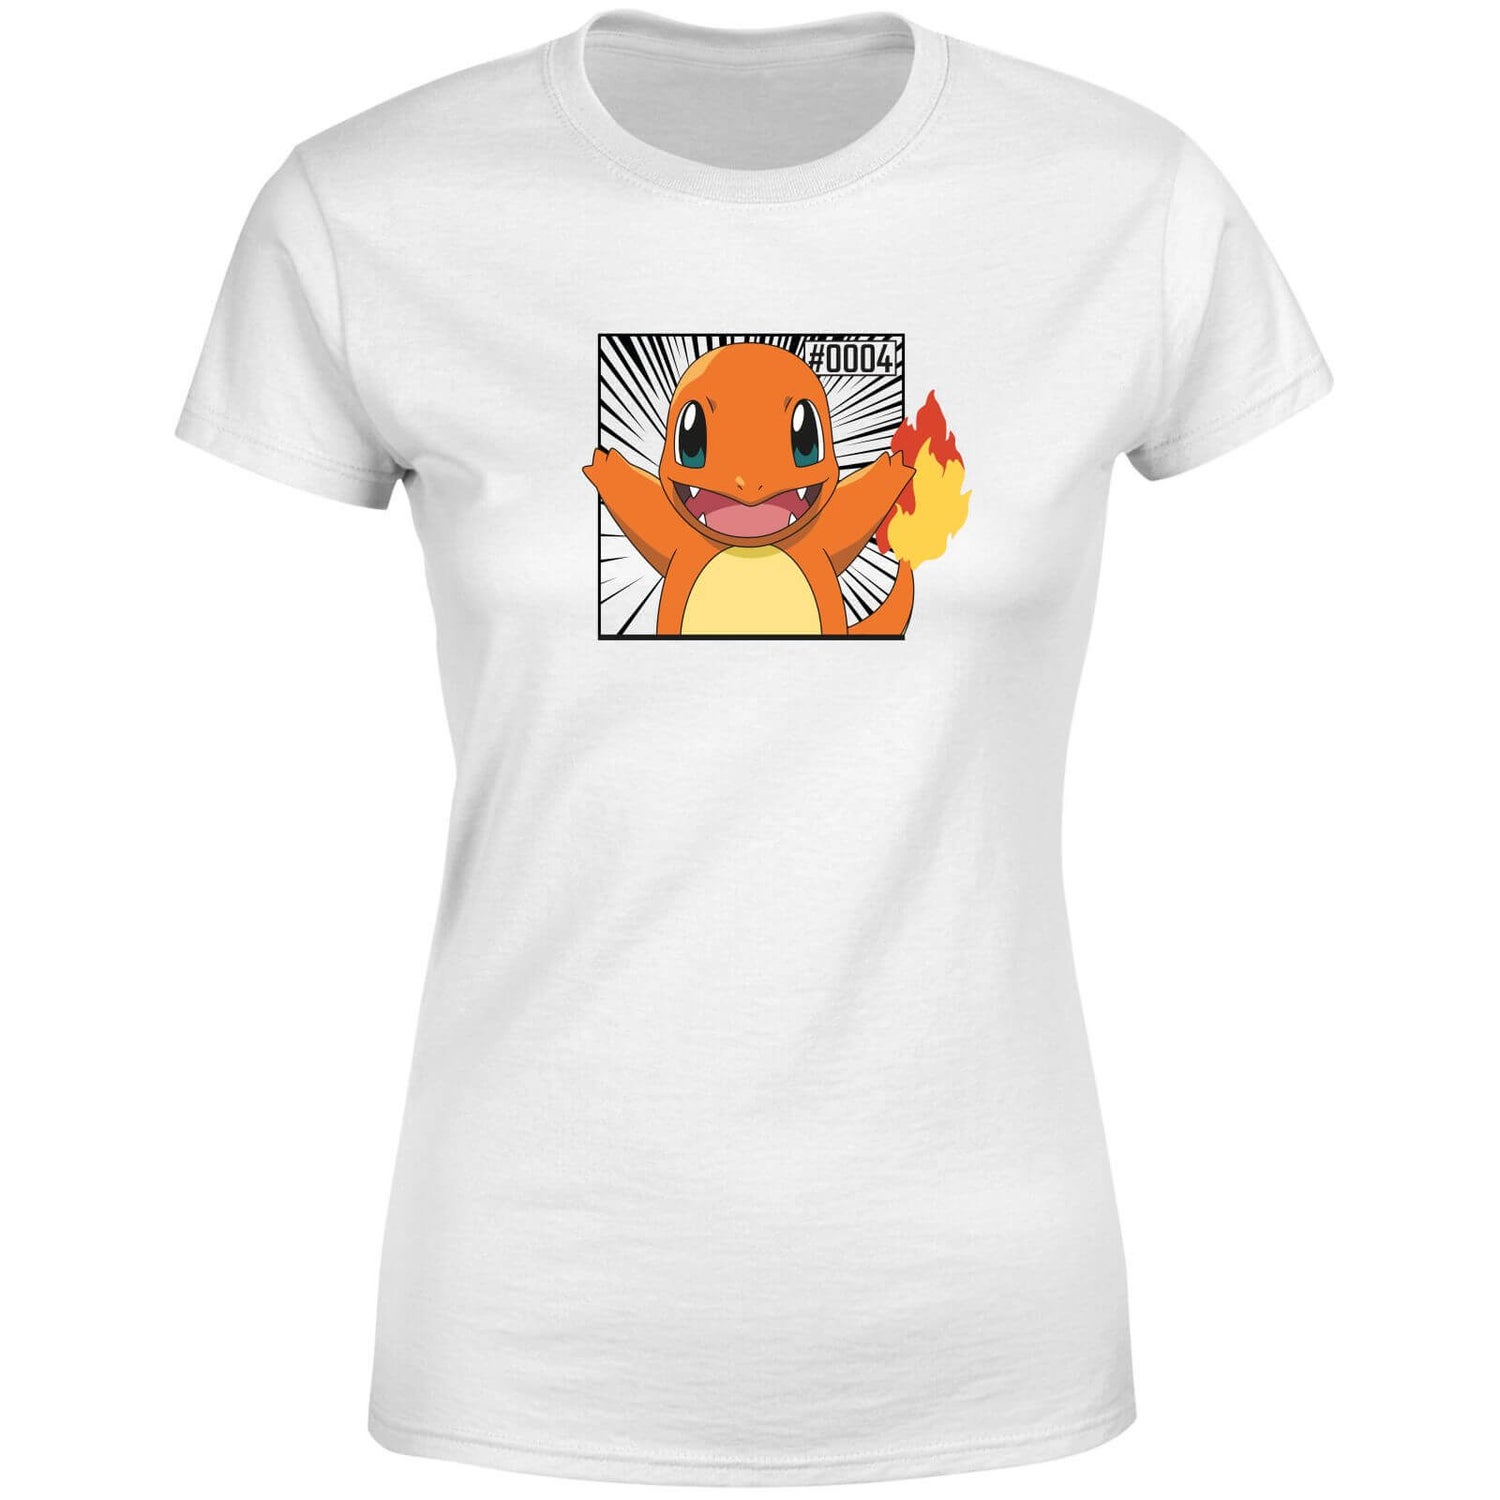 Pokémon Pokédex Charmander #0004 Women's T-Shirt - White